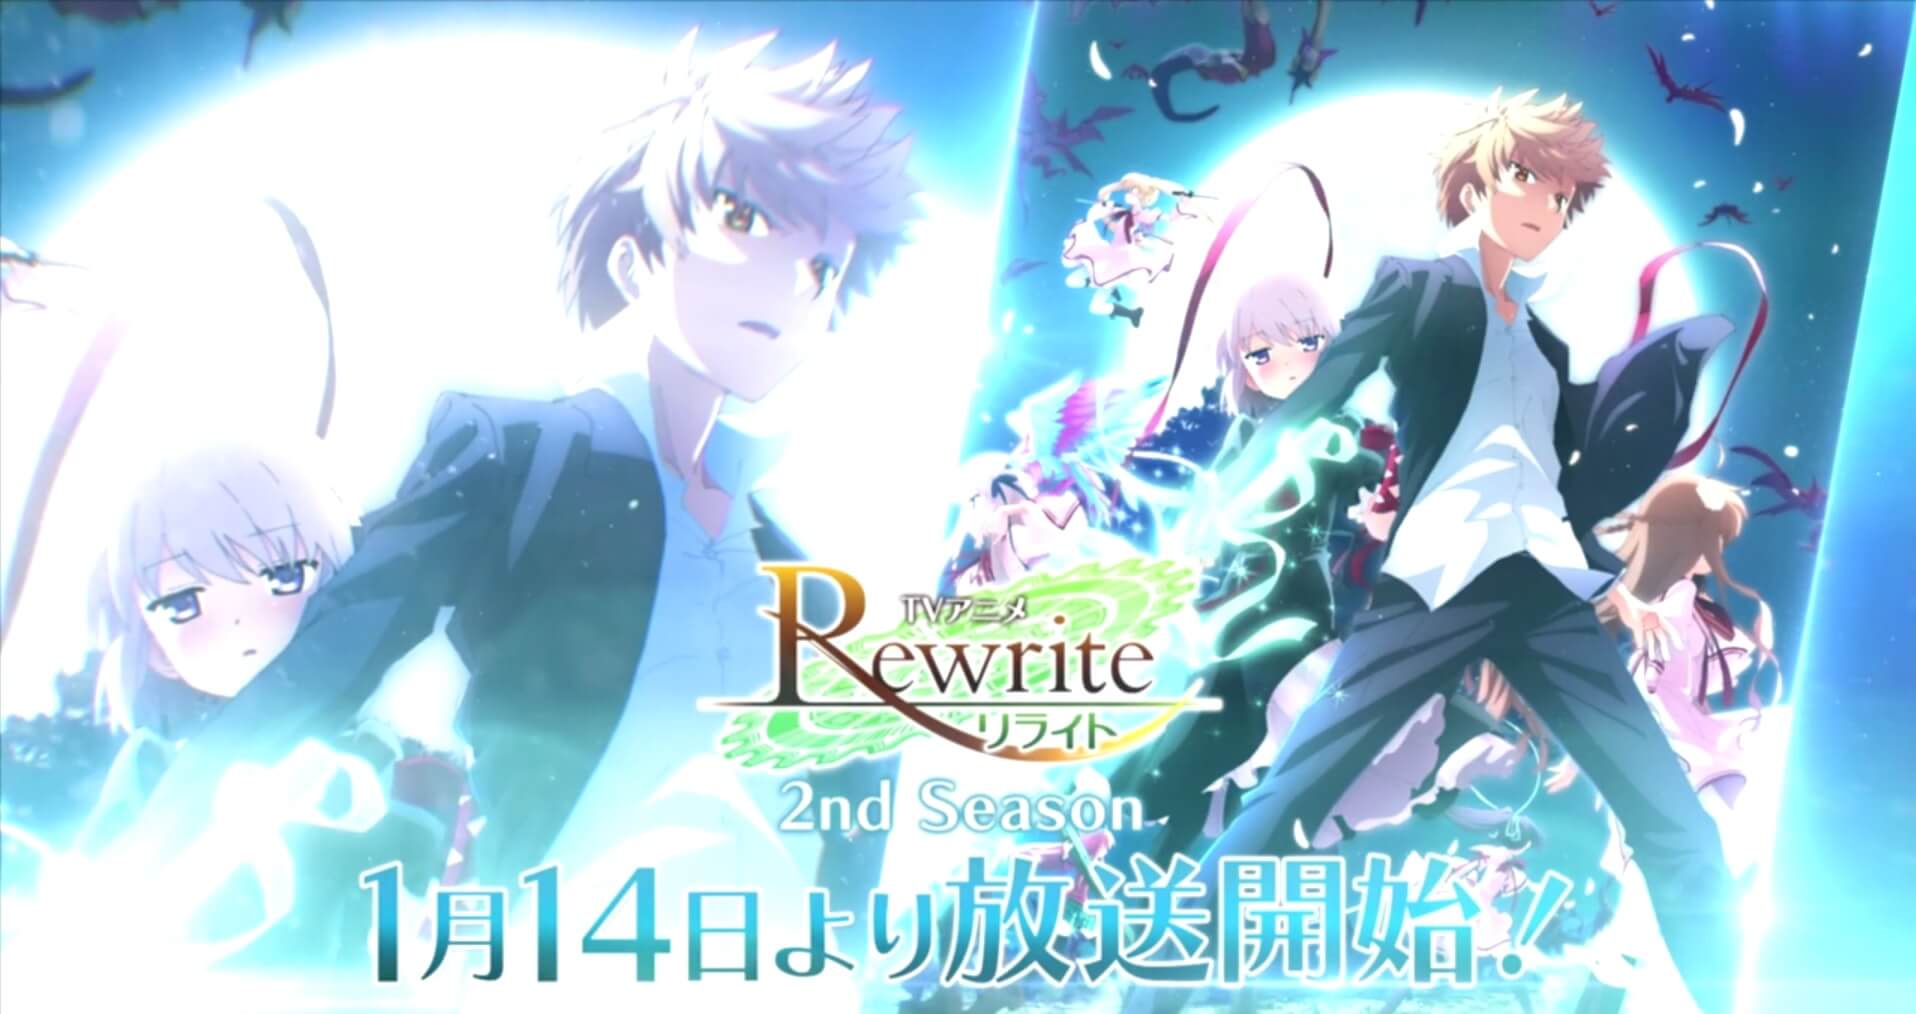 《Rewrite》2nd season 动漫官图高清壁纸海… - 堆糖，美图壁纸兴趣社区